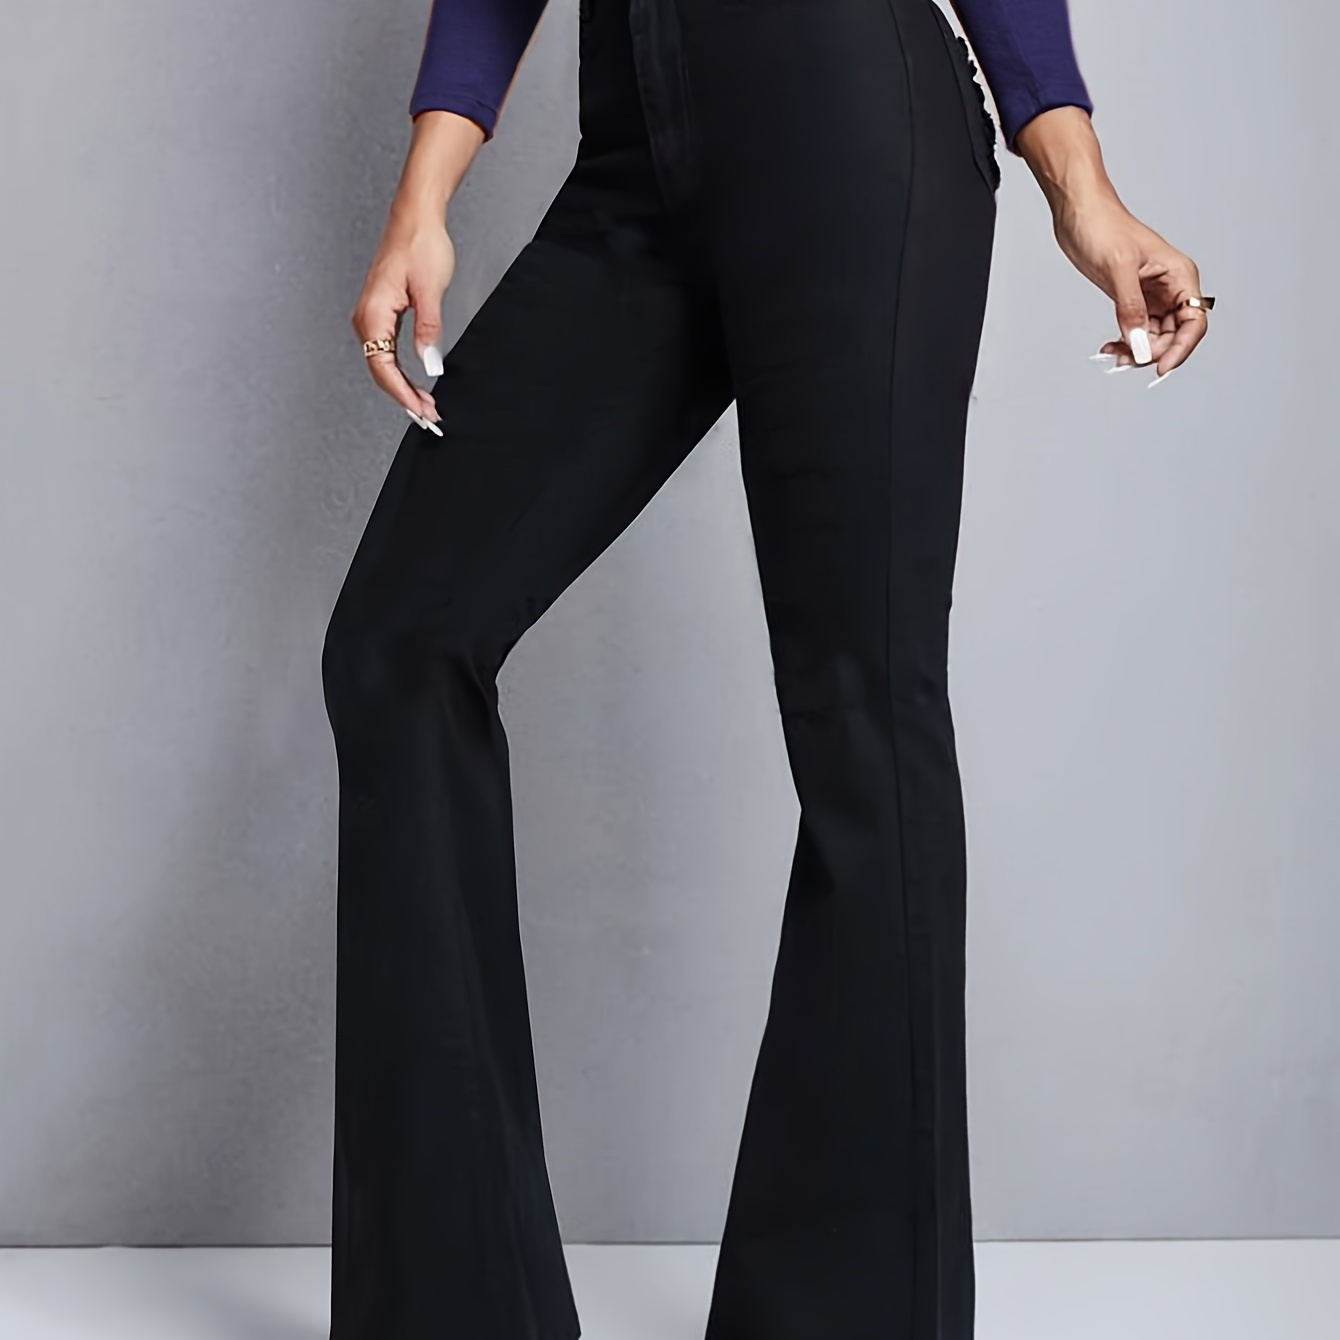 

Black High Waist Bell Bottom Jeans, High-stretch Slim Denim Pants With Pocket, Women's Denim Jeans & Clothing